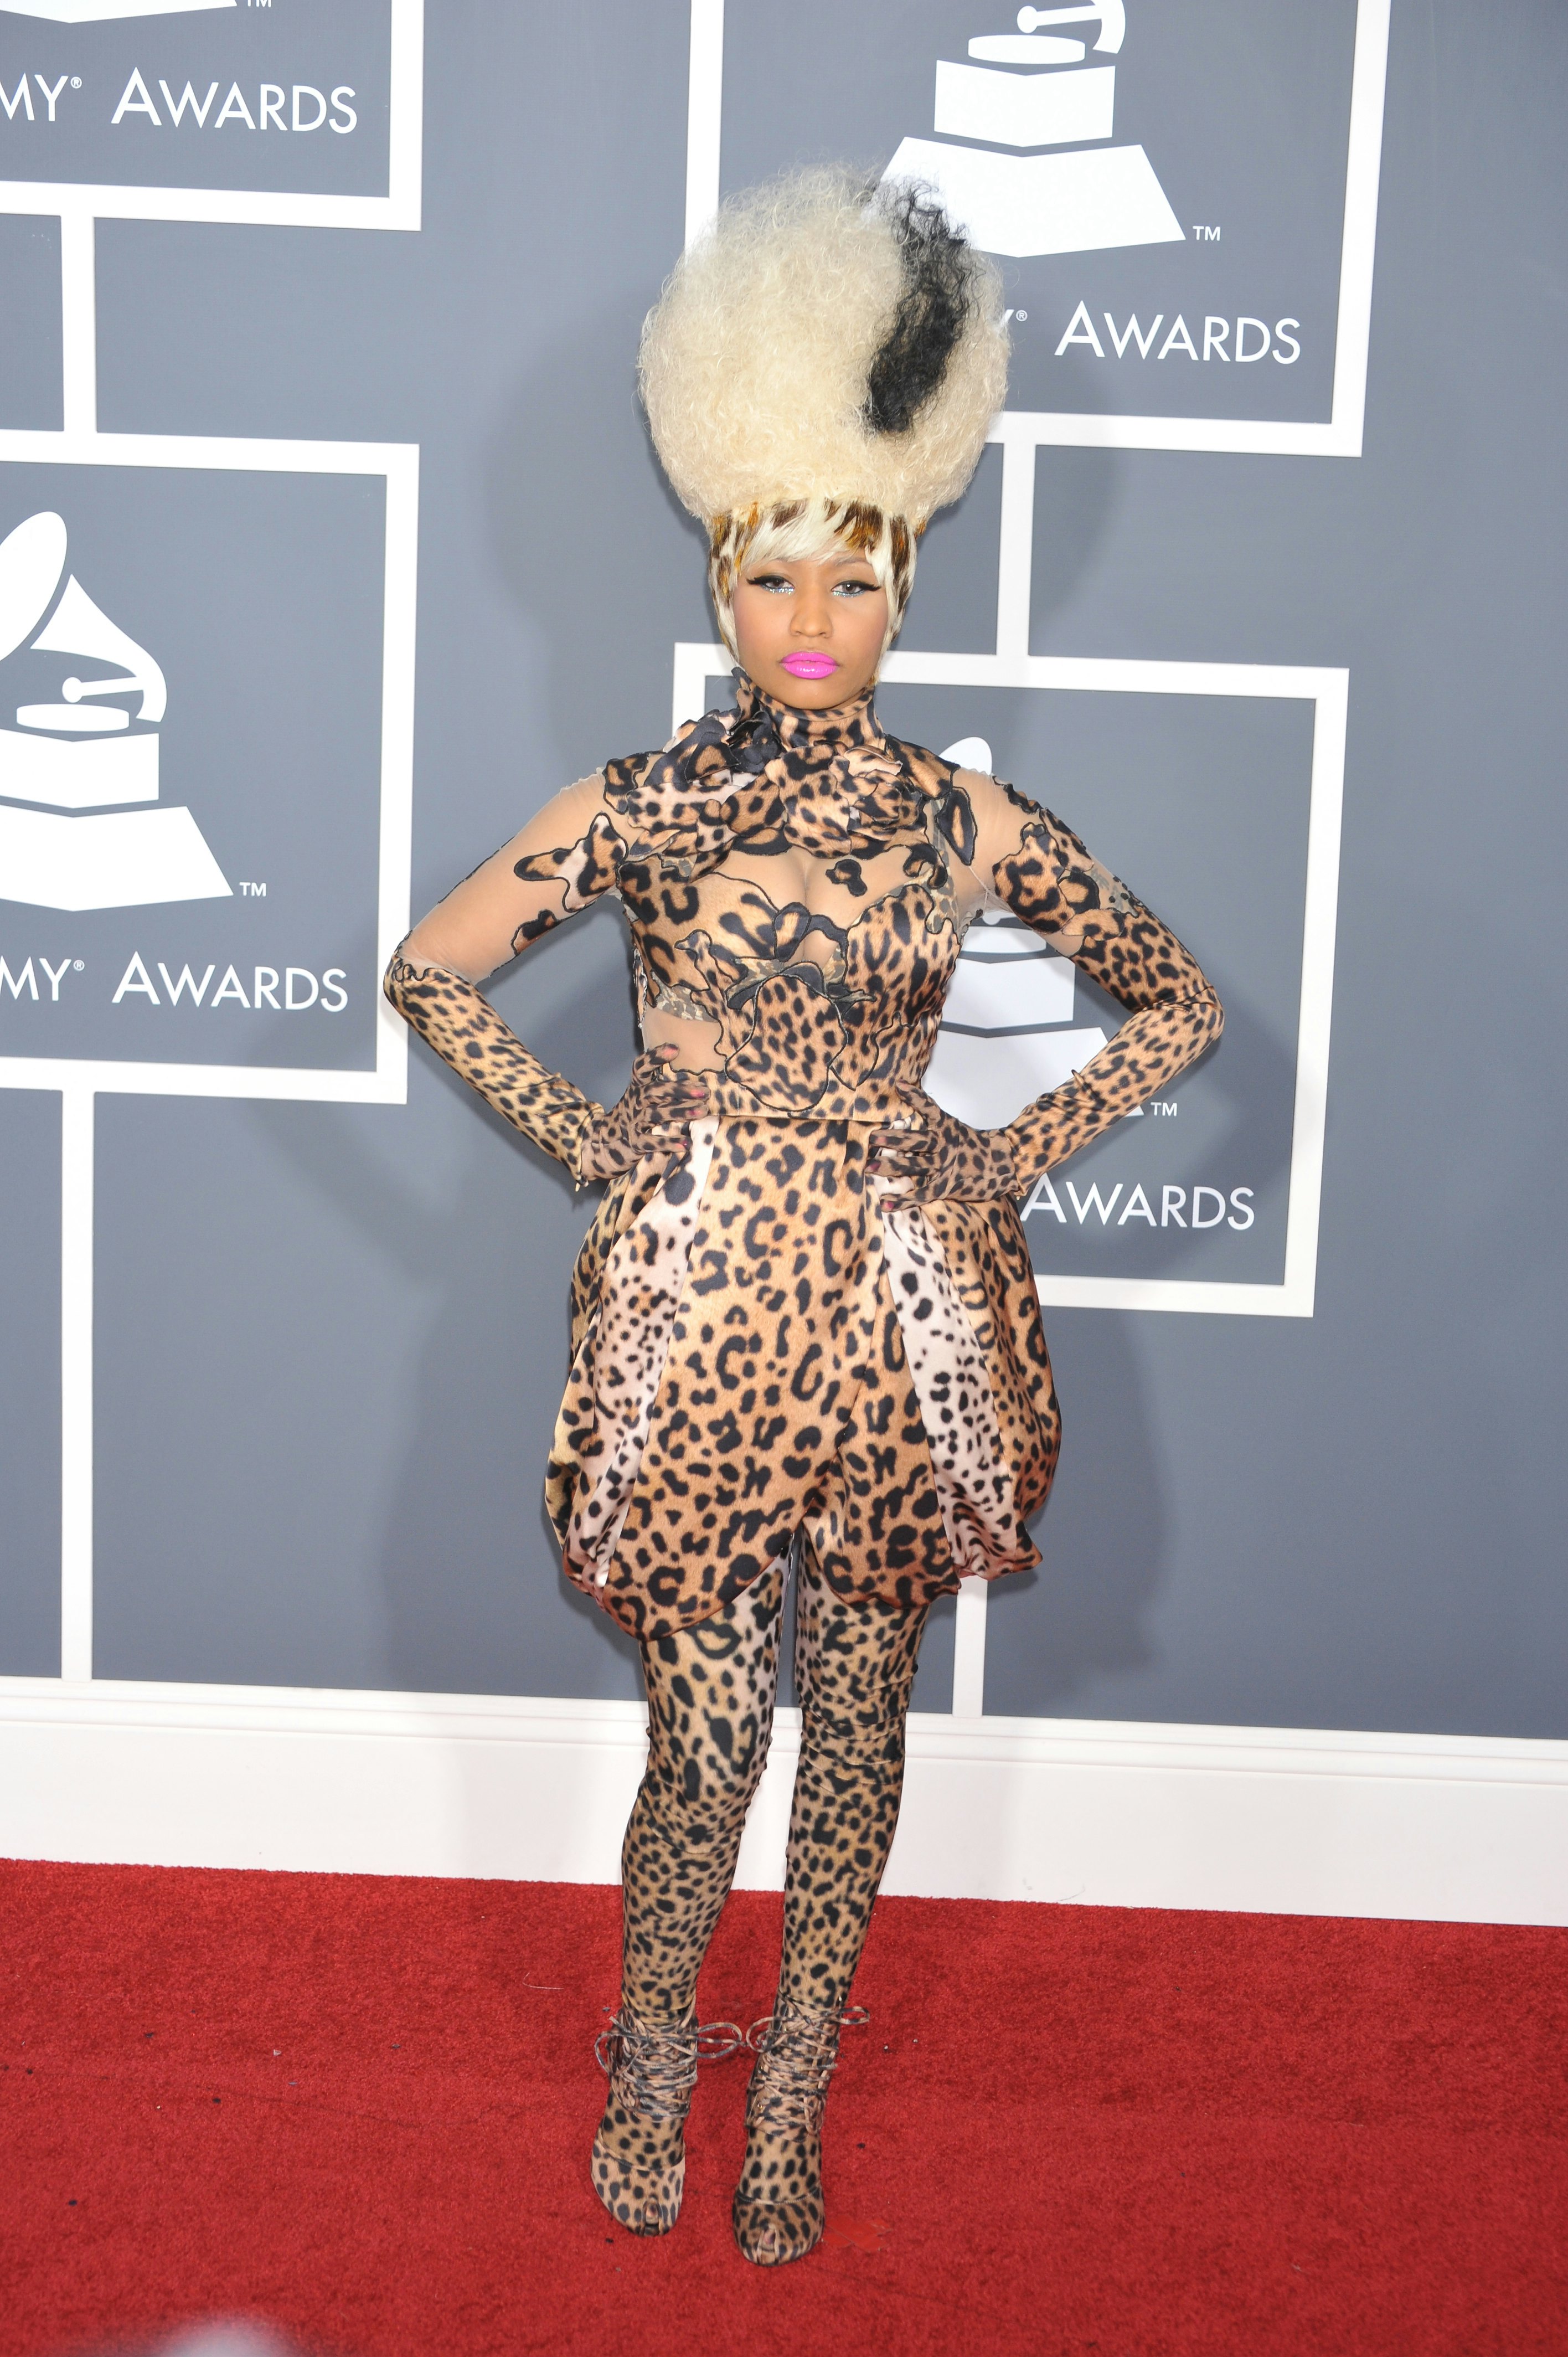 Singer Nicki Minaj arrives at the 53rd Anual Grammy Awards